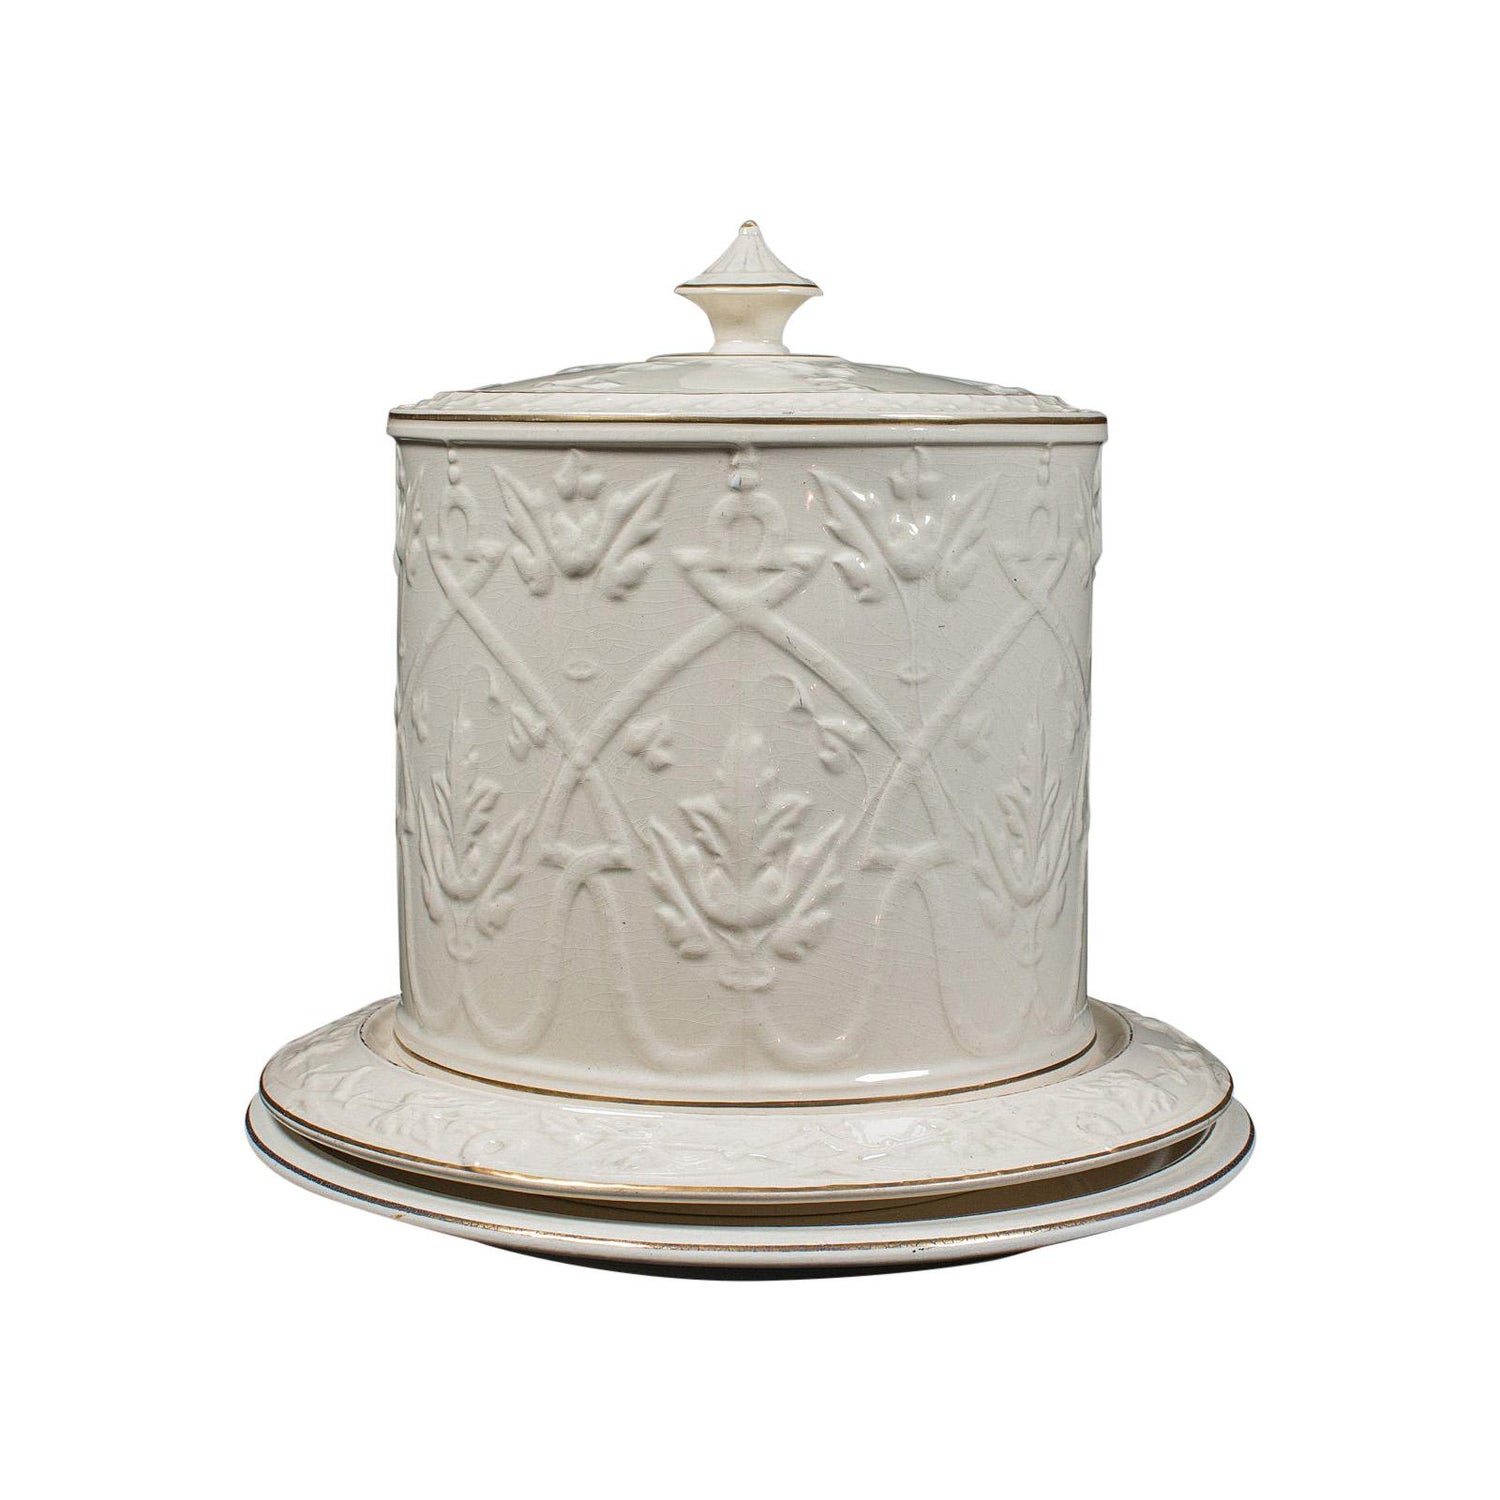 https://a.1stdibscdn.com/antique-stilton-dome-english-ceramic-cheese-keeper-cracker-plate-victorian-for-sale/1121189/f_244505021625826296137/24450502_master.jpg?width=1500